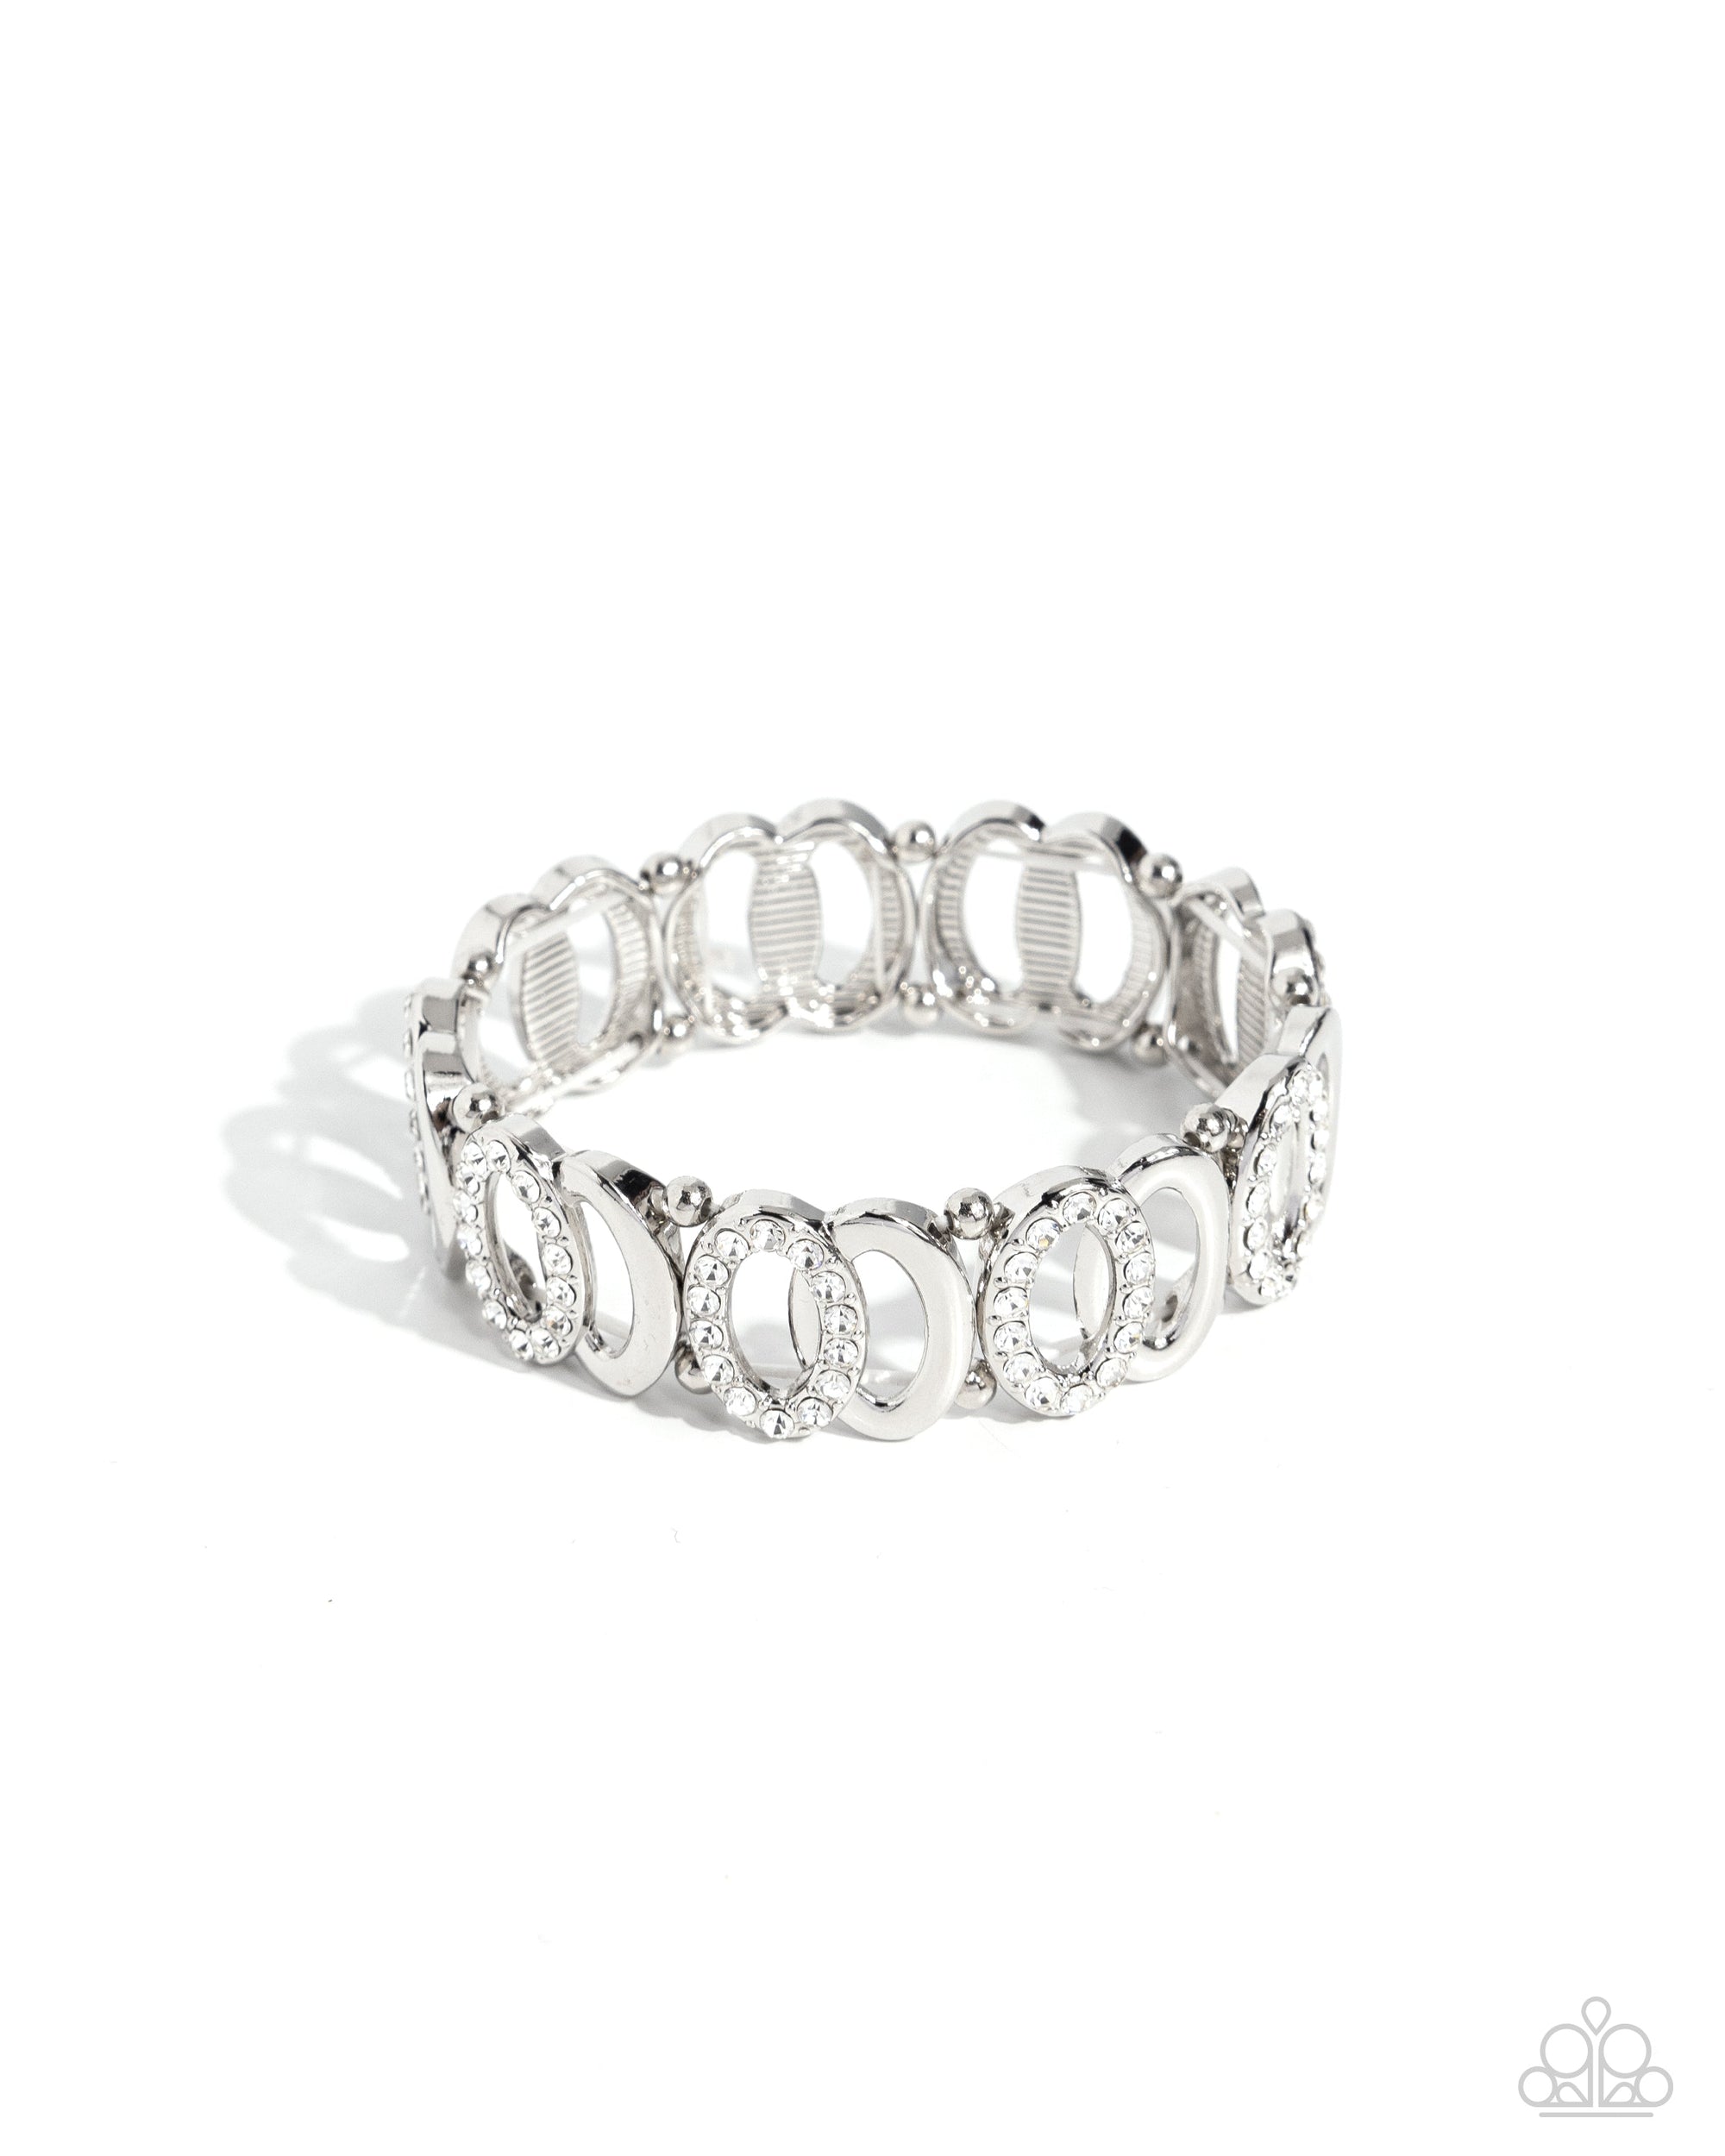 Refined Rarity White Rhinestone Bracelet - Paparazzi Accessories- lightbox - CarasShop.com - $5 Jewelry by Cara Jewels